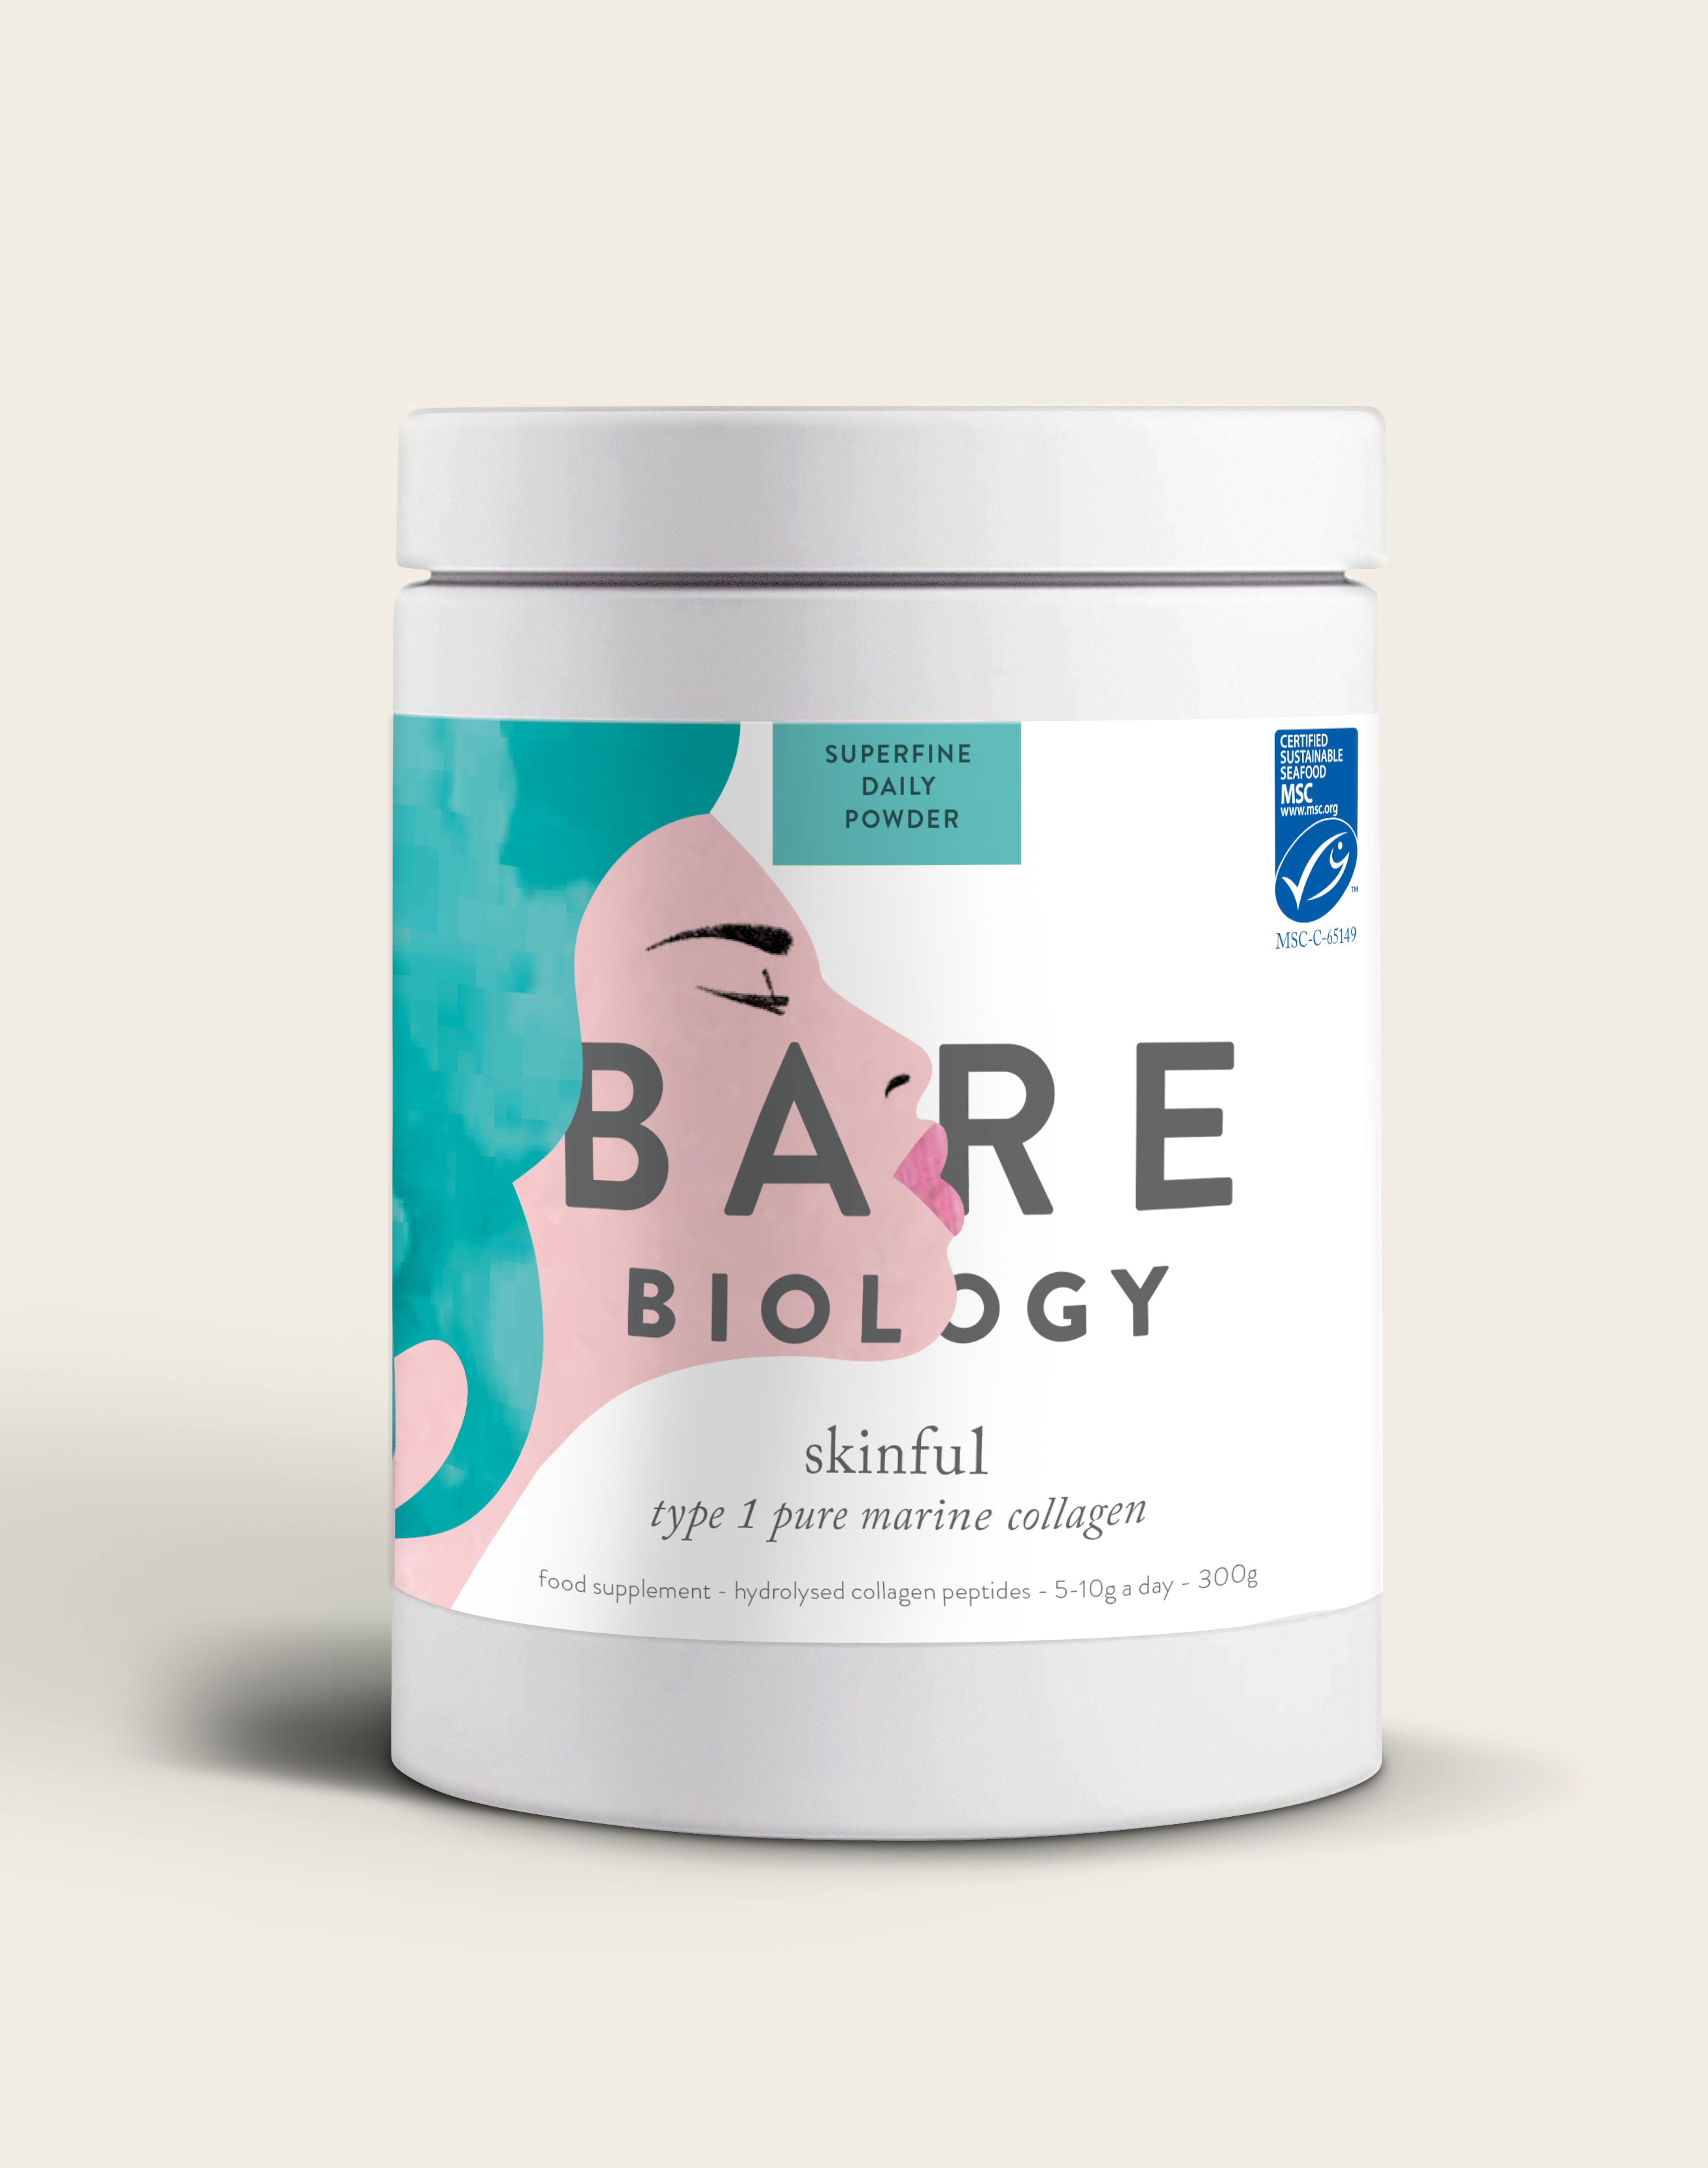 www.barebiology.com